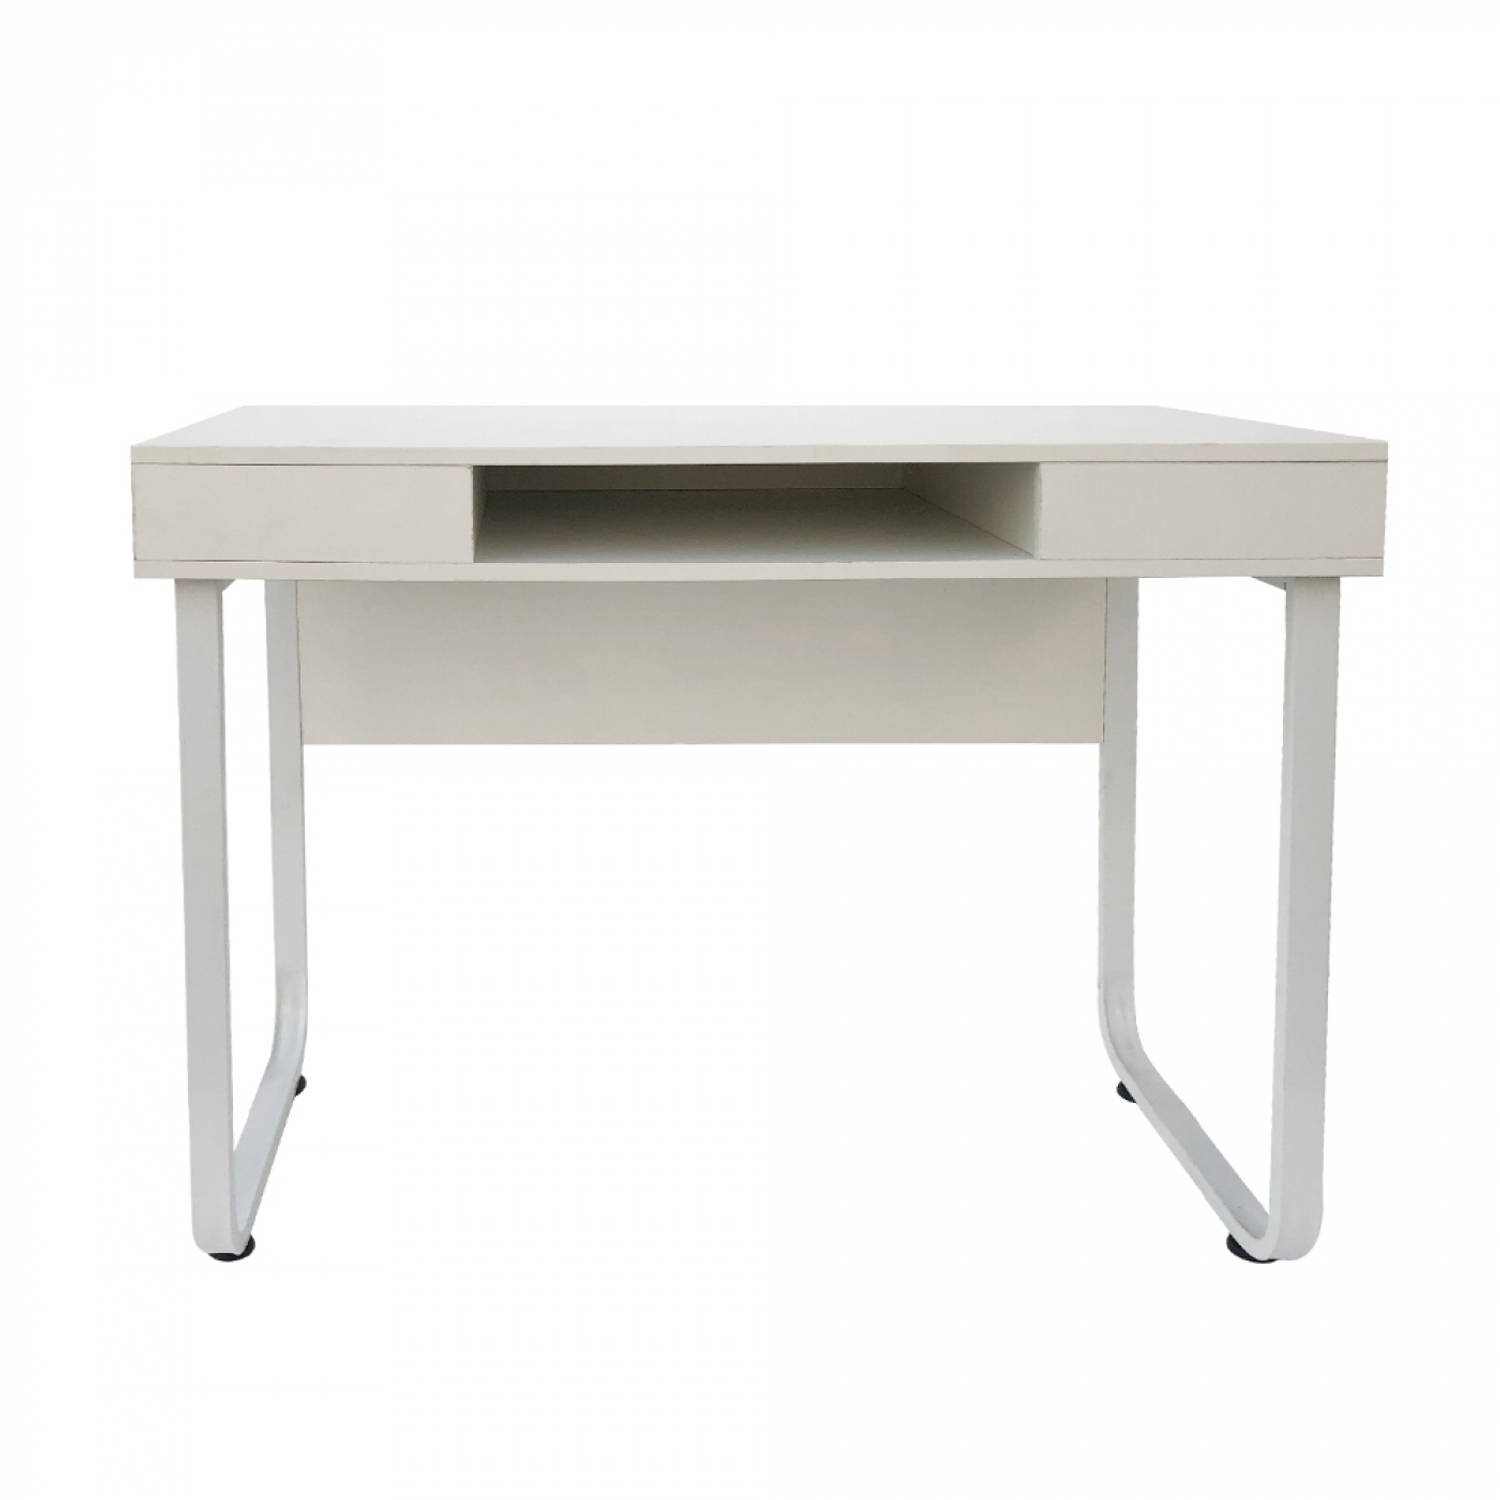 Opera aanpassen litteken Bureau computer tafel Stoer - sidetable - industrieel modern design -  metaal hout - wit | Blokker